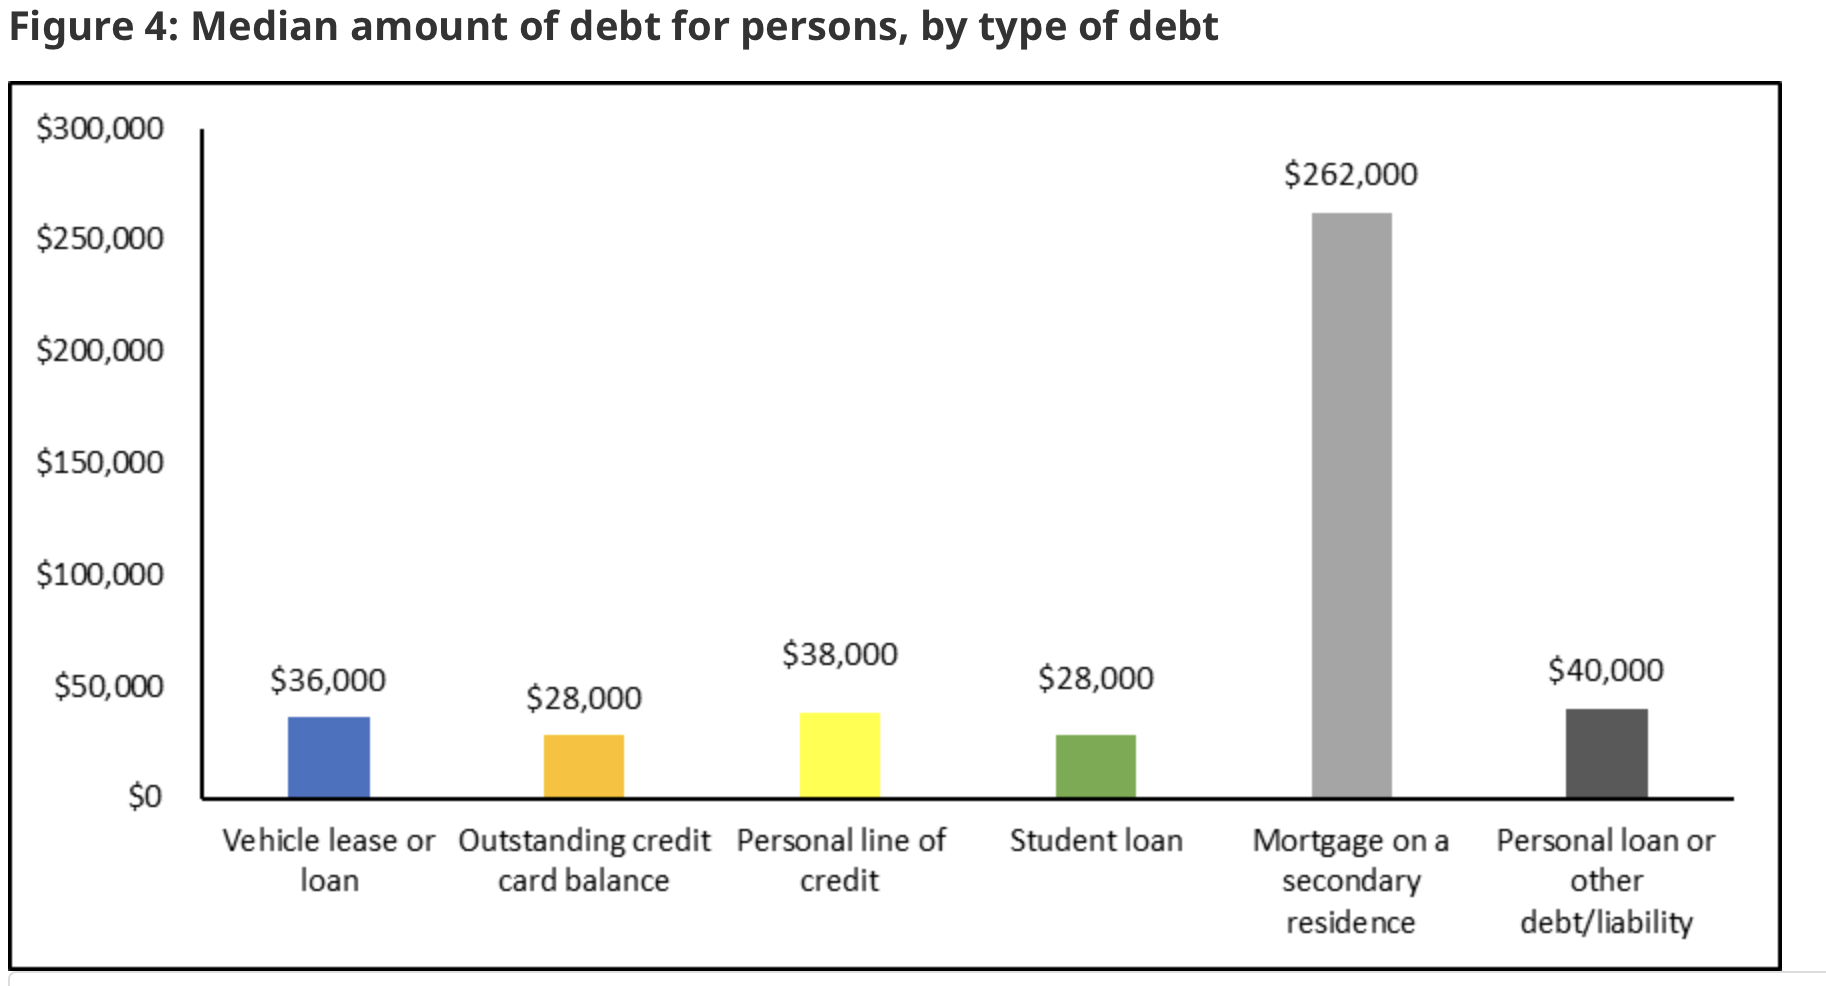 _images/debt-types.png